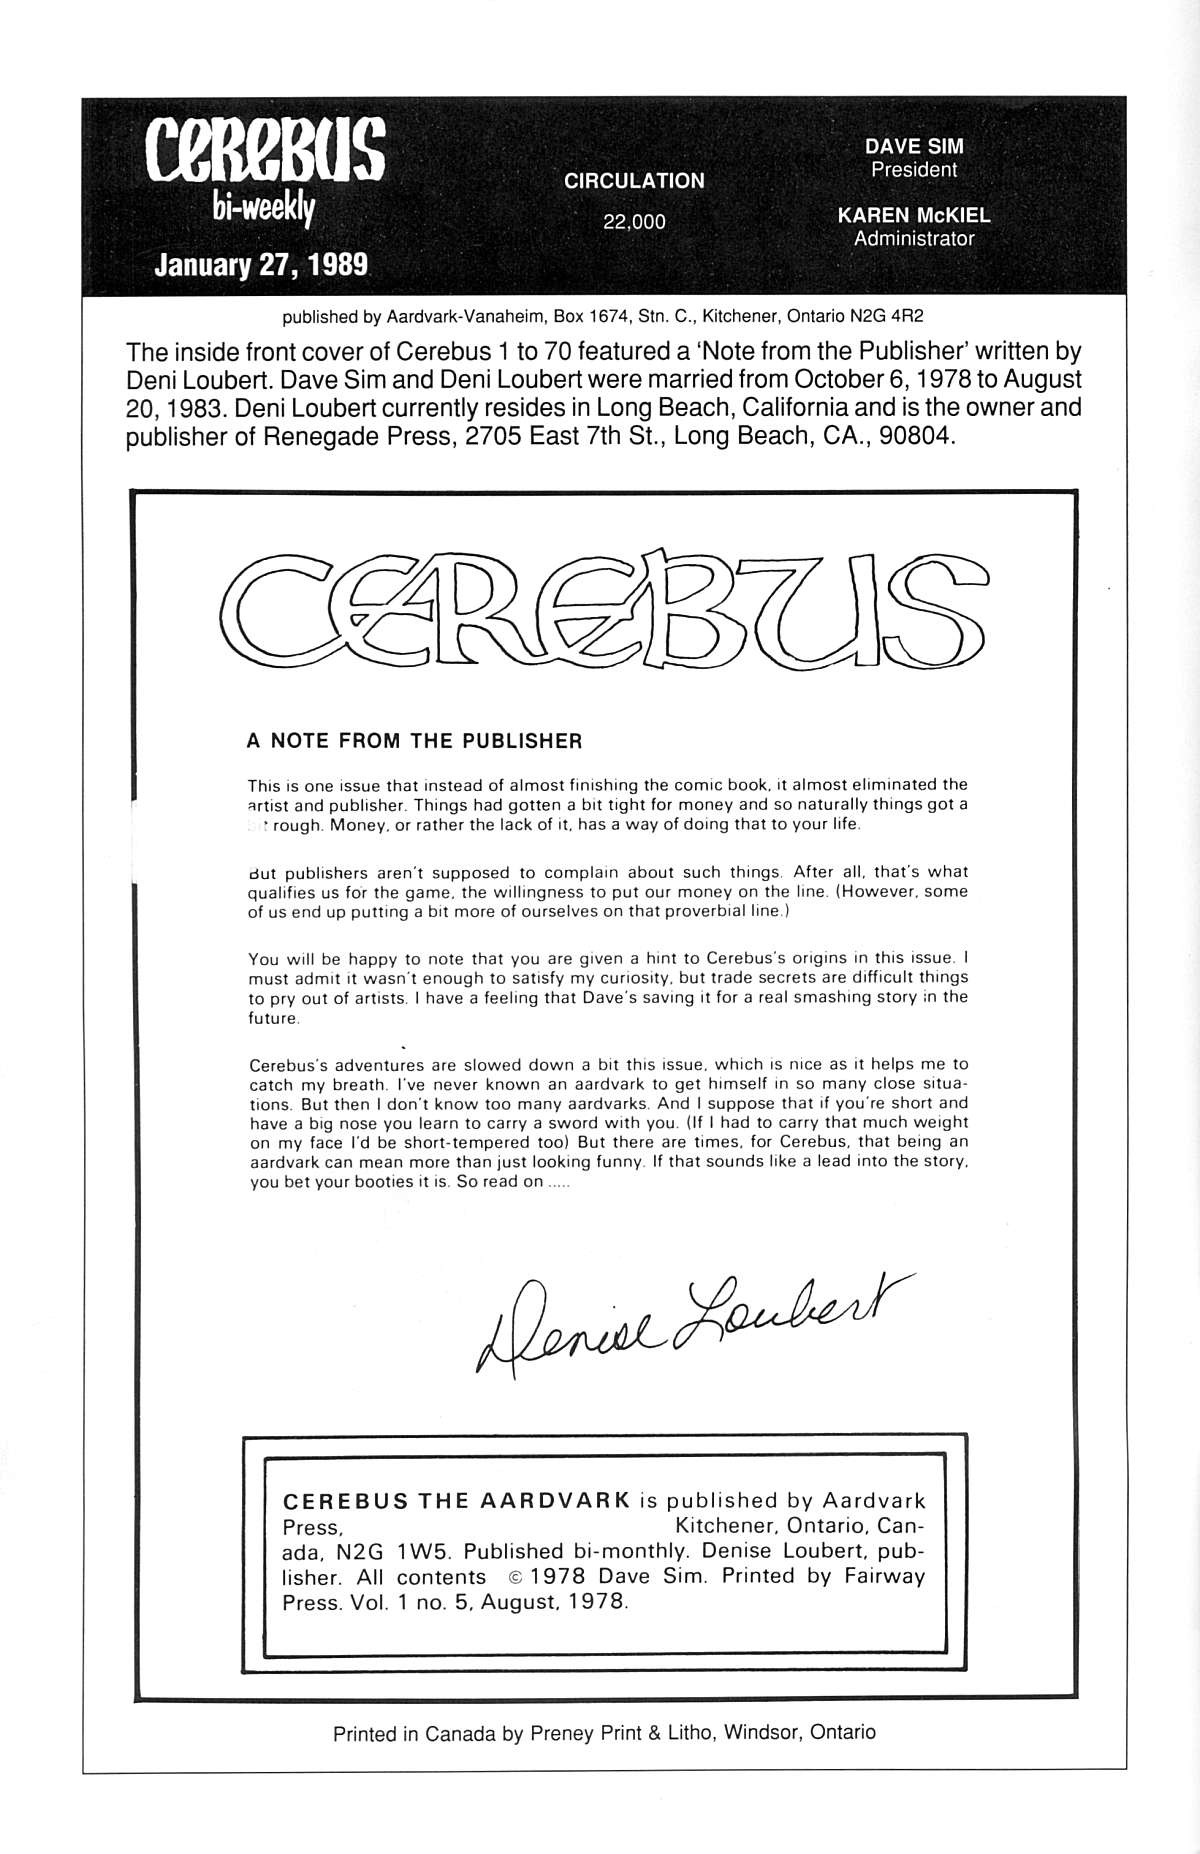 Read online Cerebus comic -  Issue #5 - 2